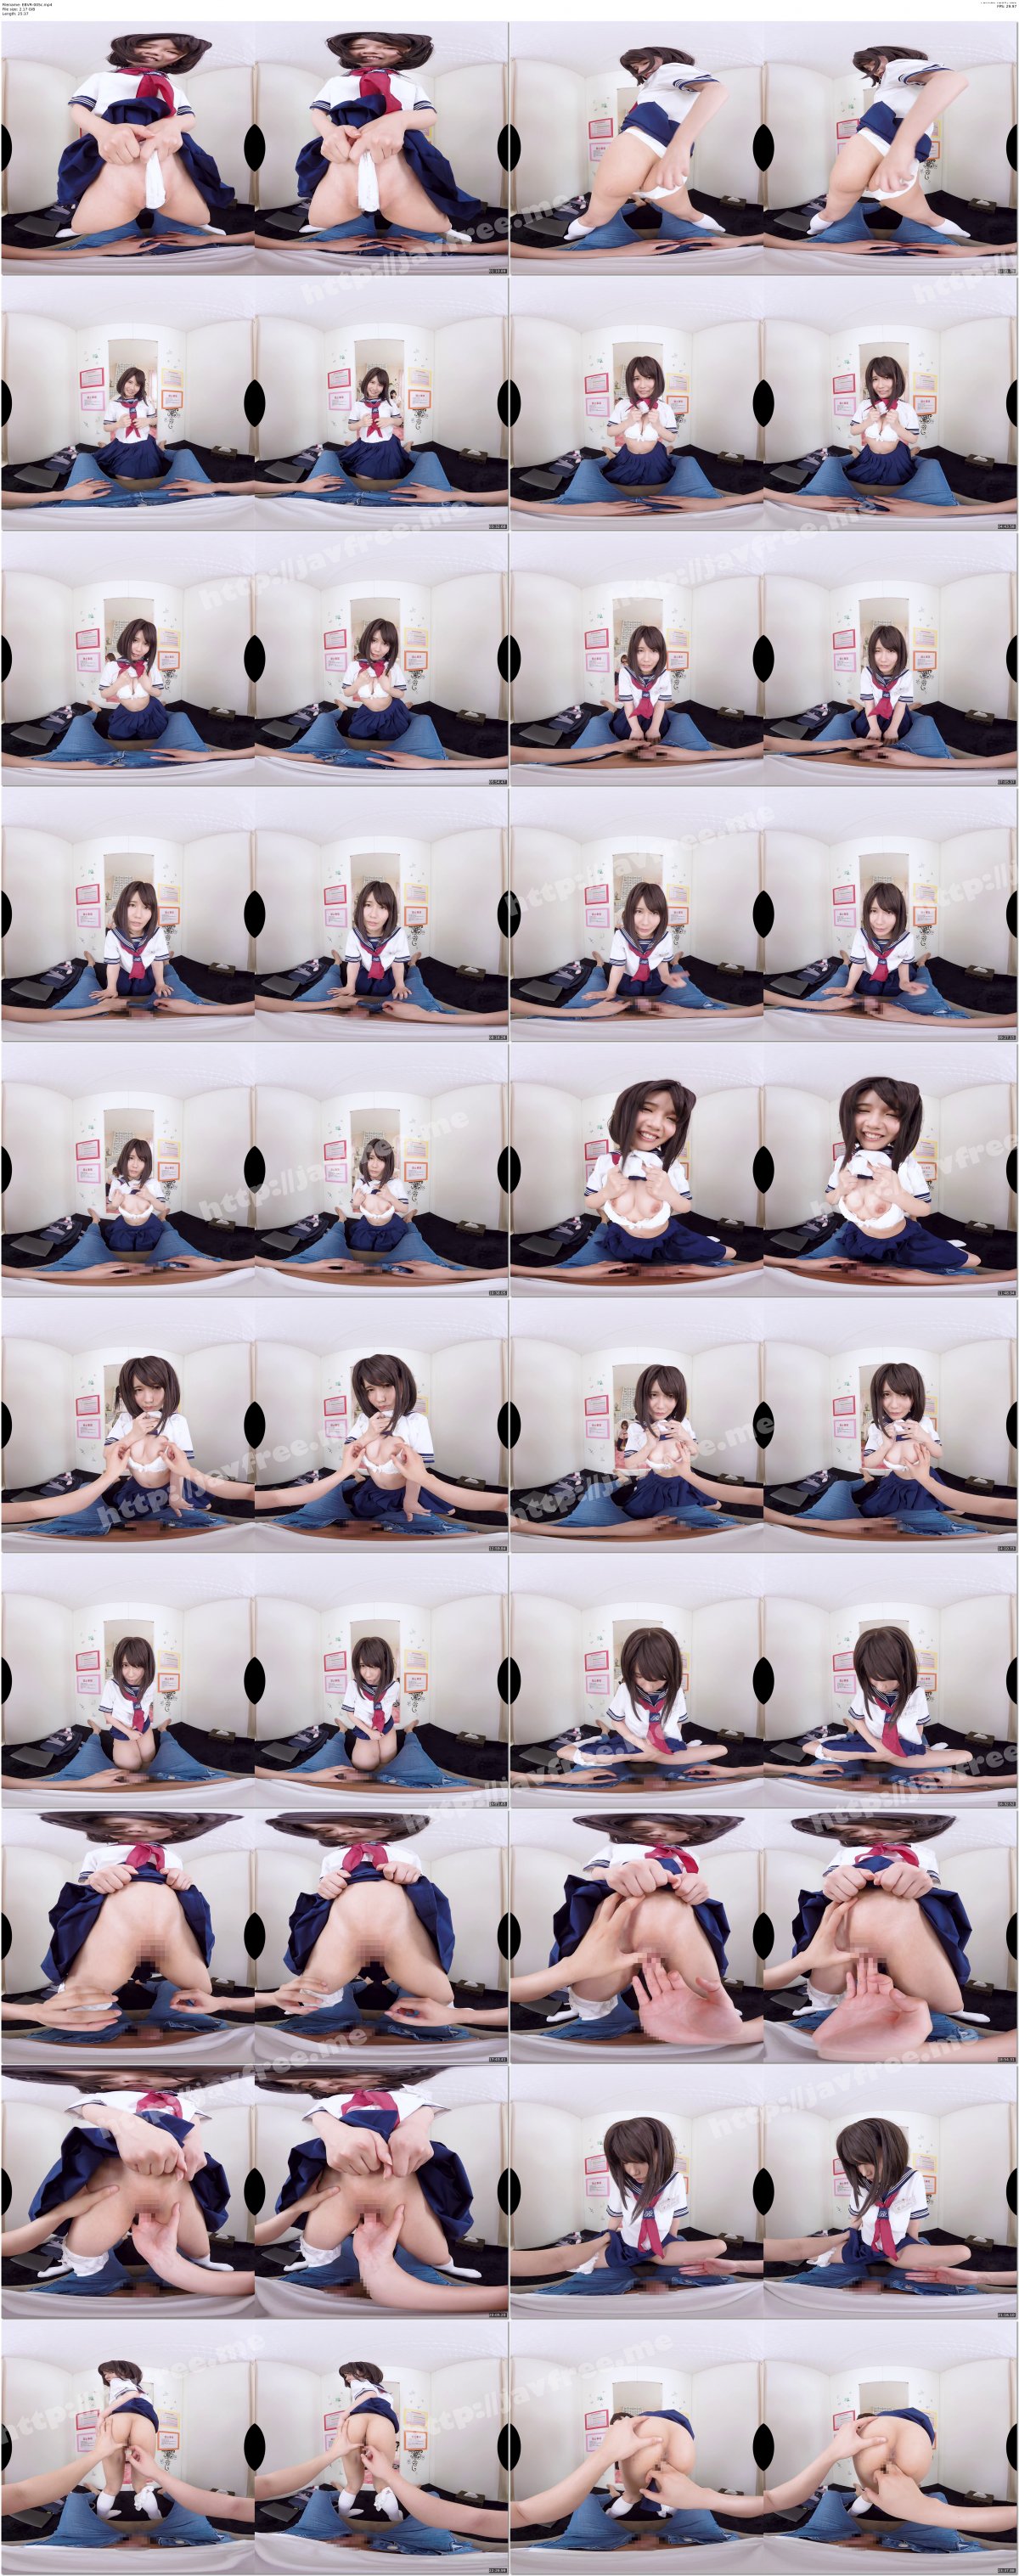 [EBVR-005] 【VR】パンティ喰い込みパフォーマンス エアキスエアフェラ 超密着マッサージ スレンダー制服美少女がオナニー完全サポート 見学リフレ体験VR 栗衣みい